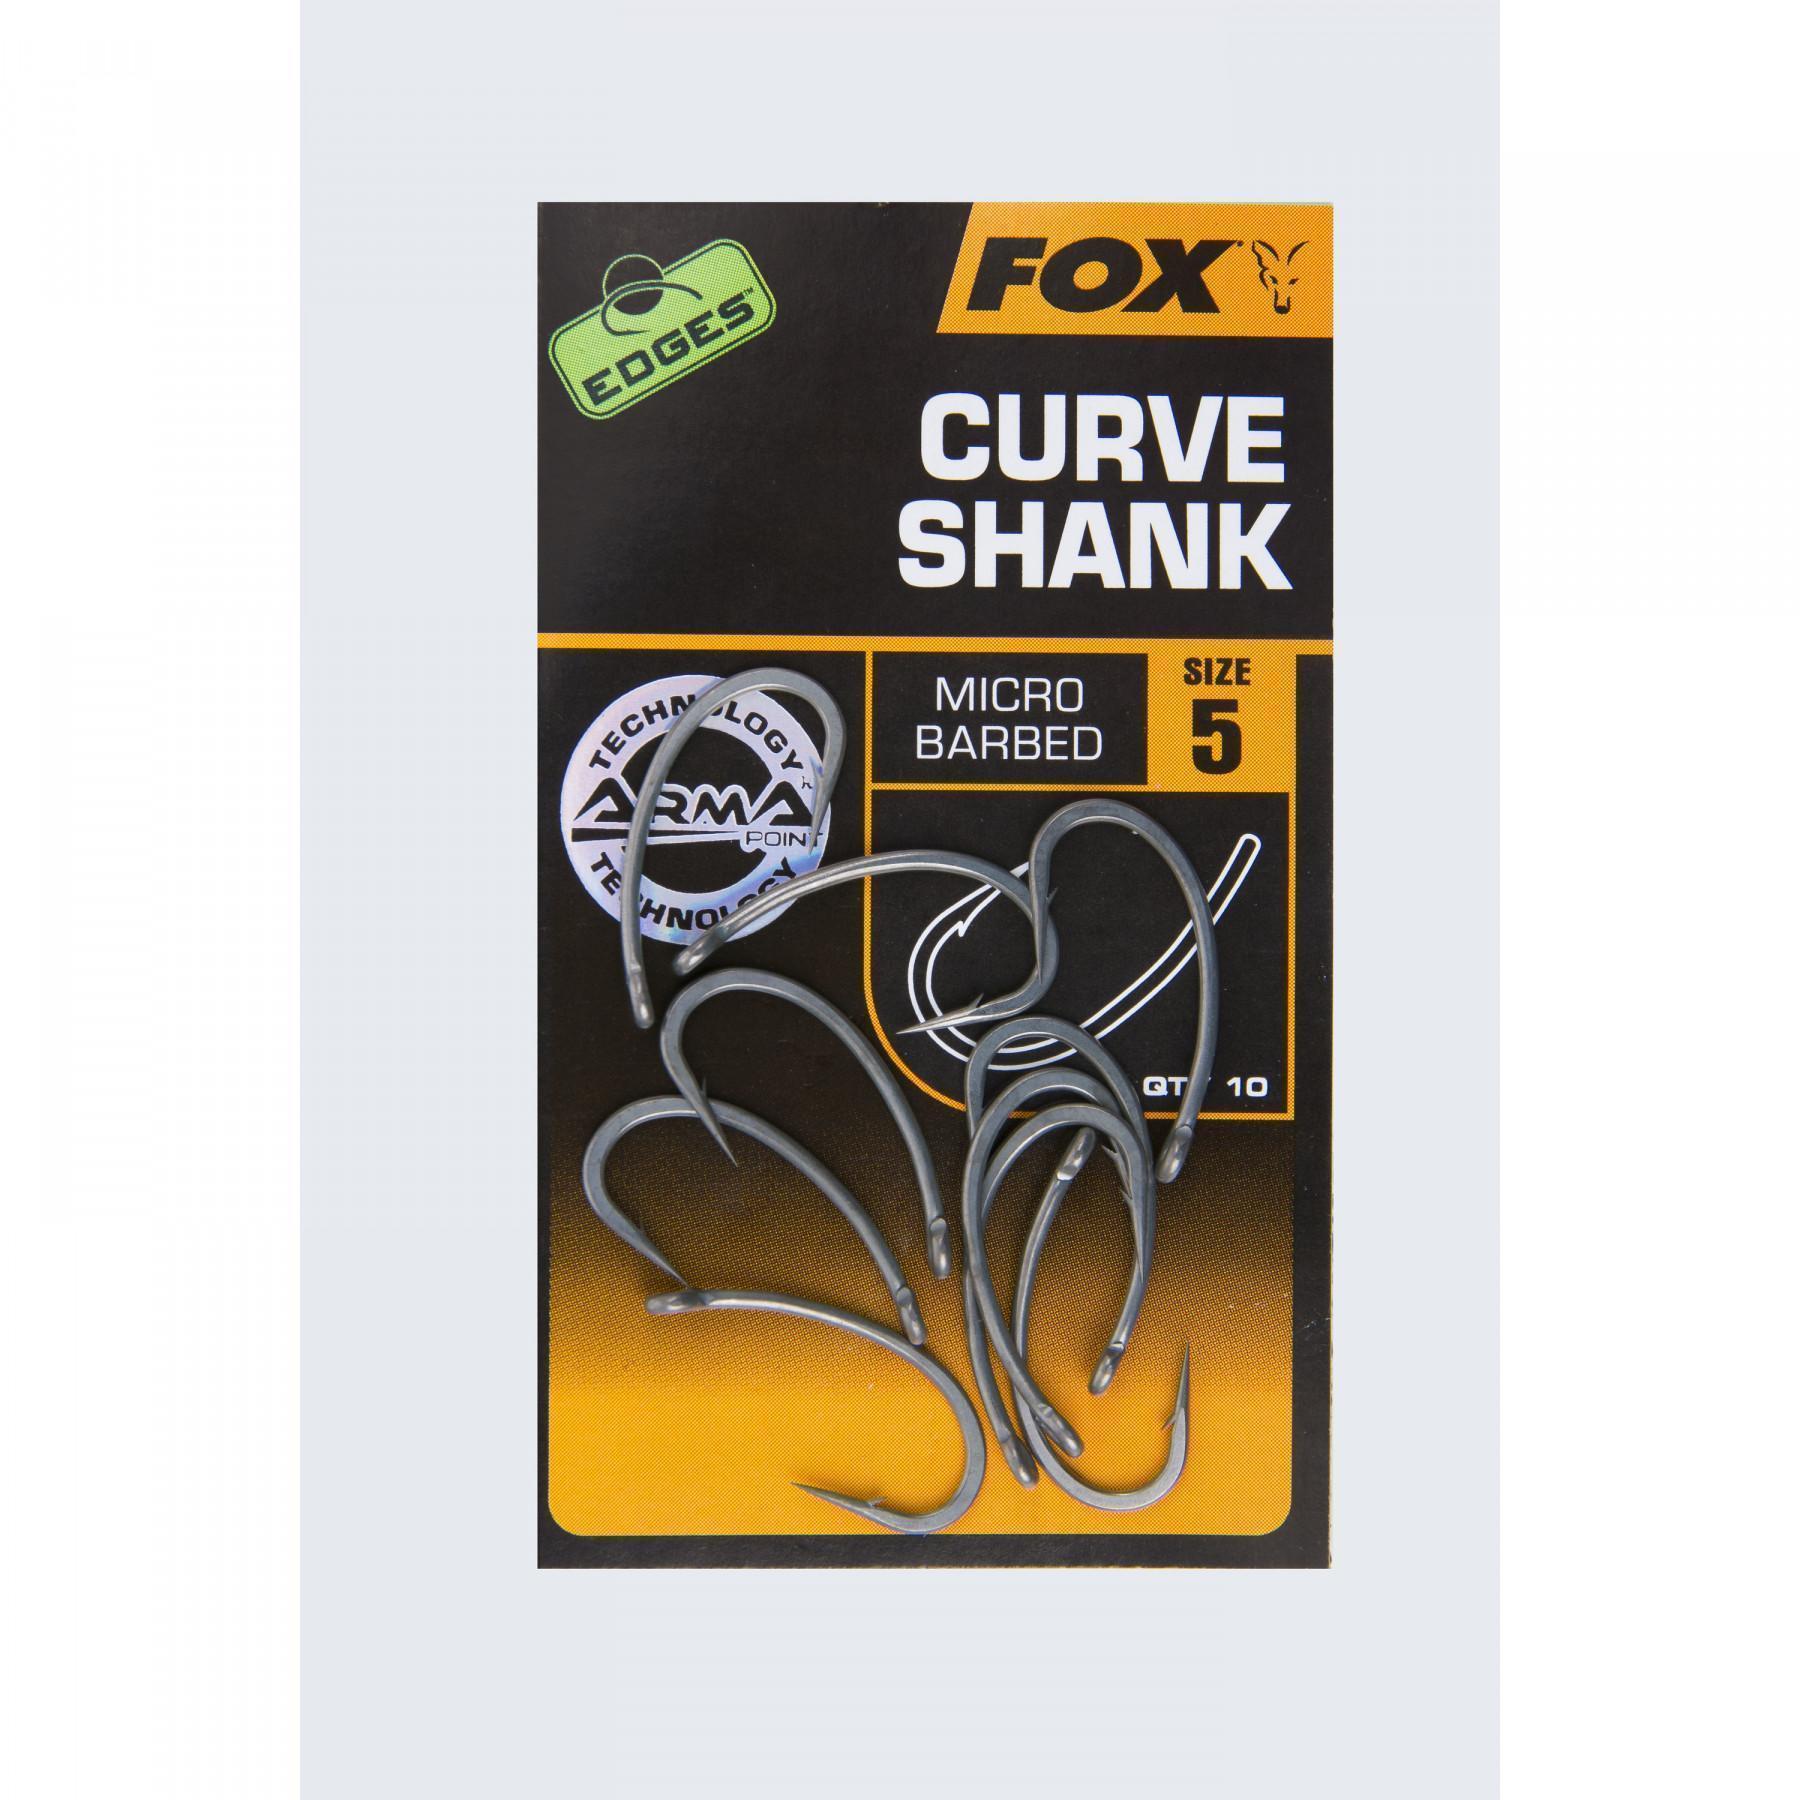 Haak Fox Curve Shank Edges taille 2